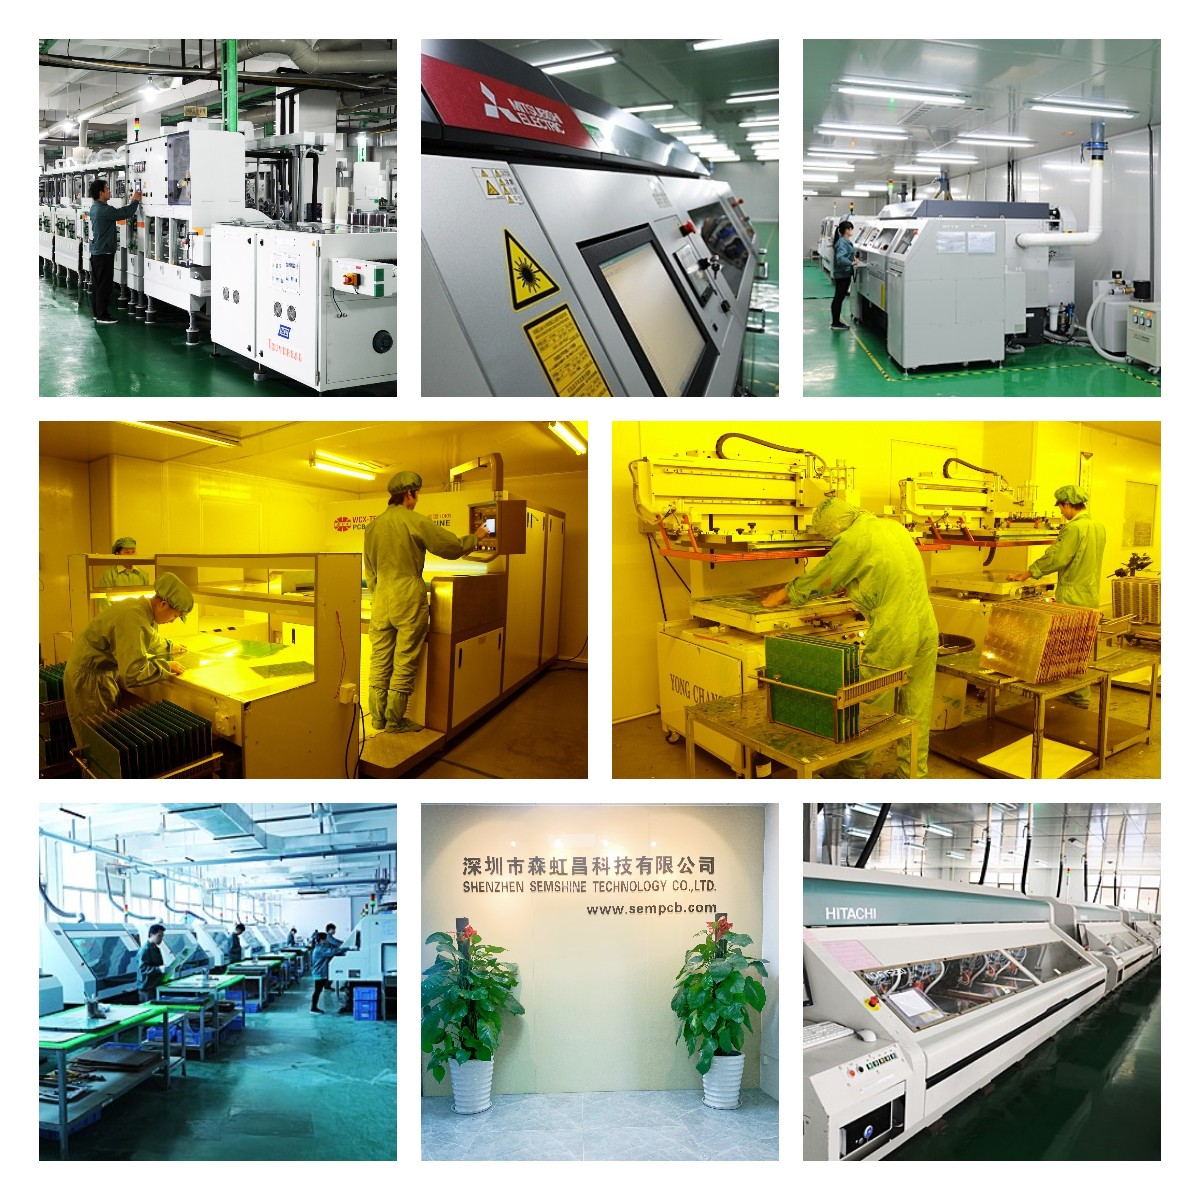 Shenzhen Semshine Technology Co., Ltd.